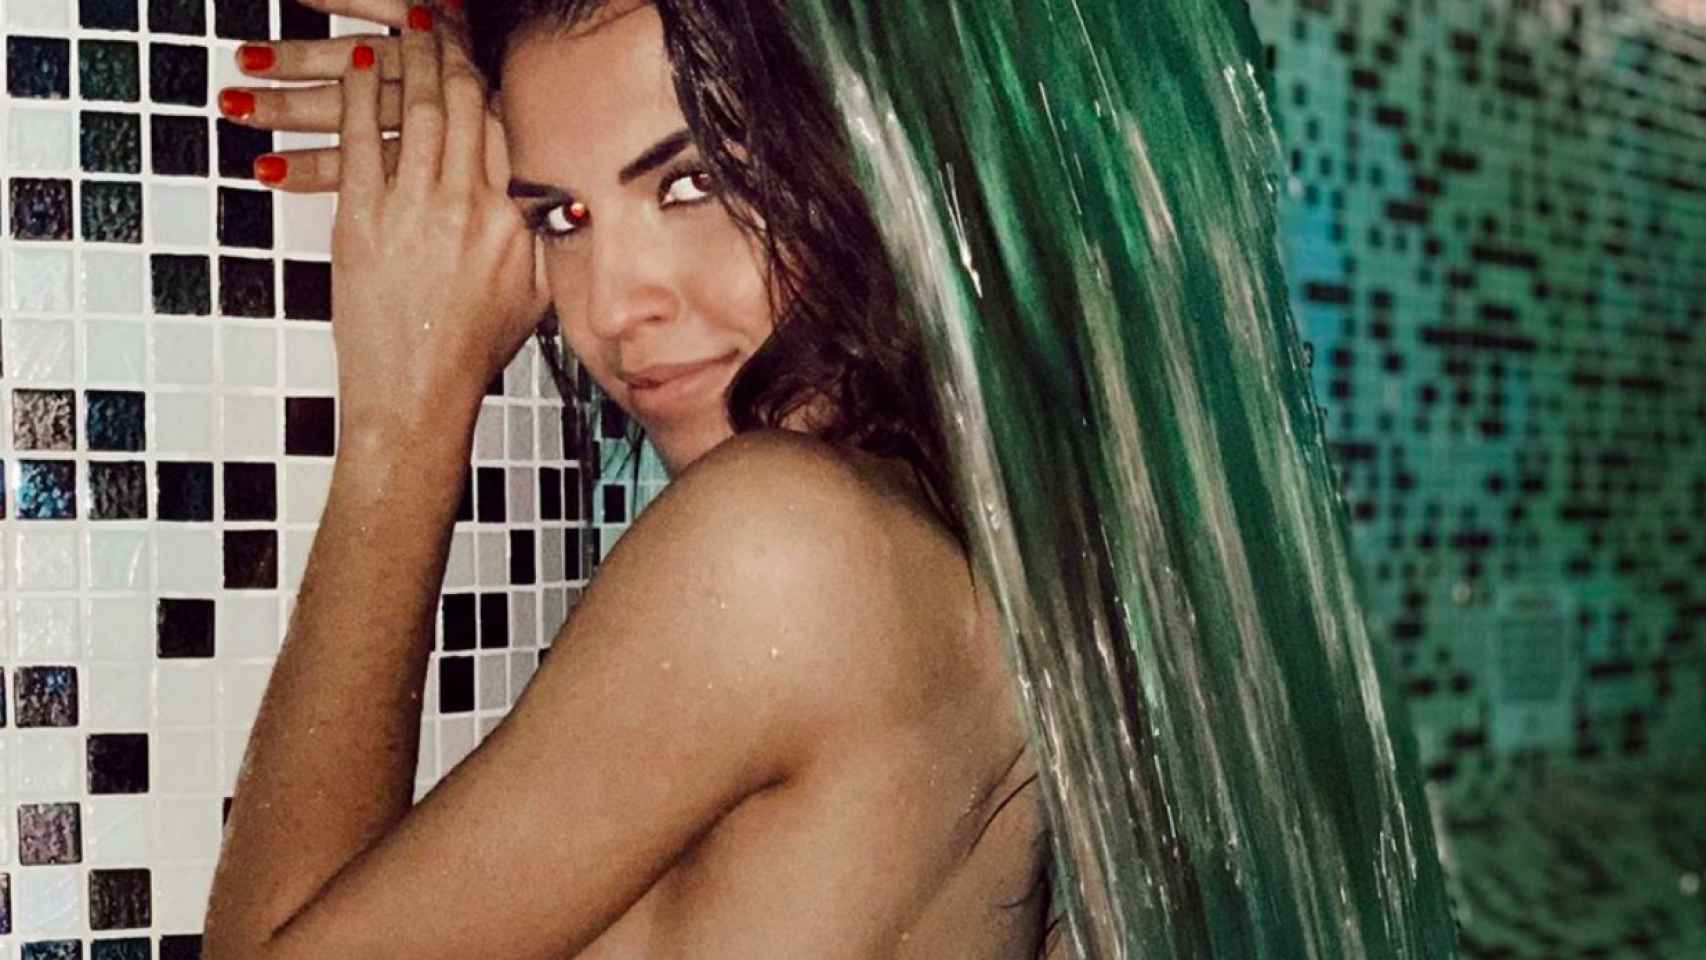 Sofia Suescun en la ducha / INSTAGRAM